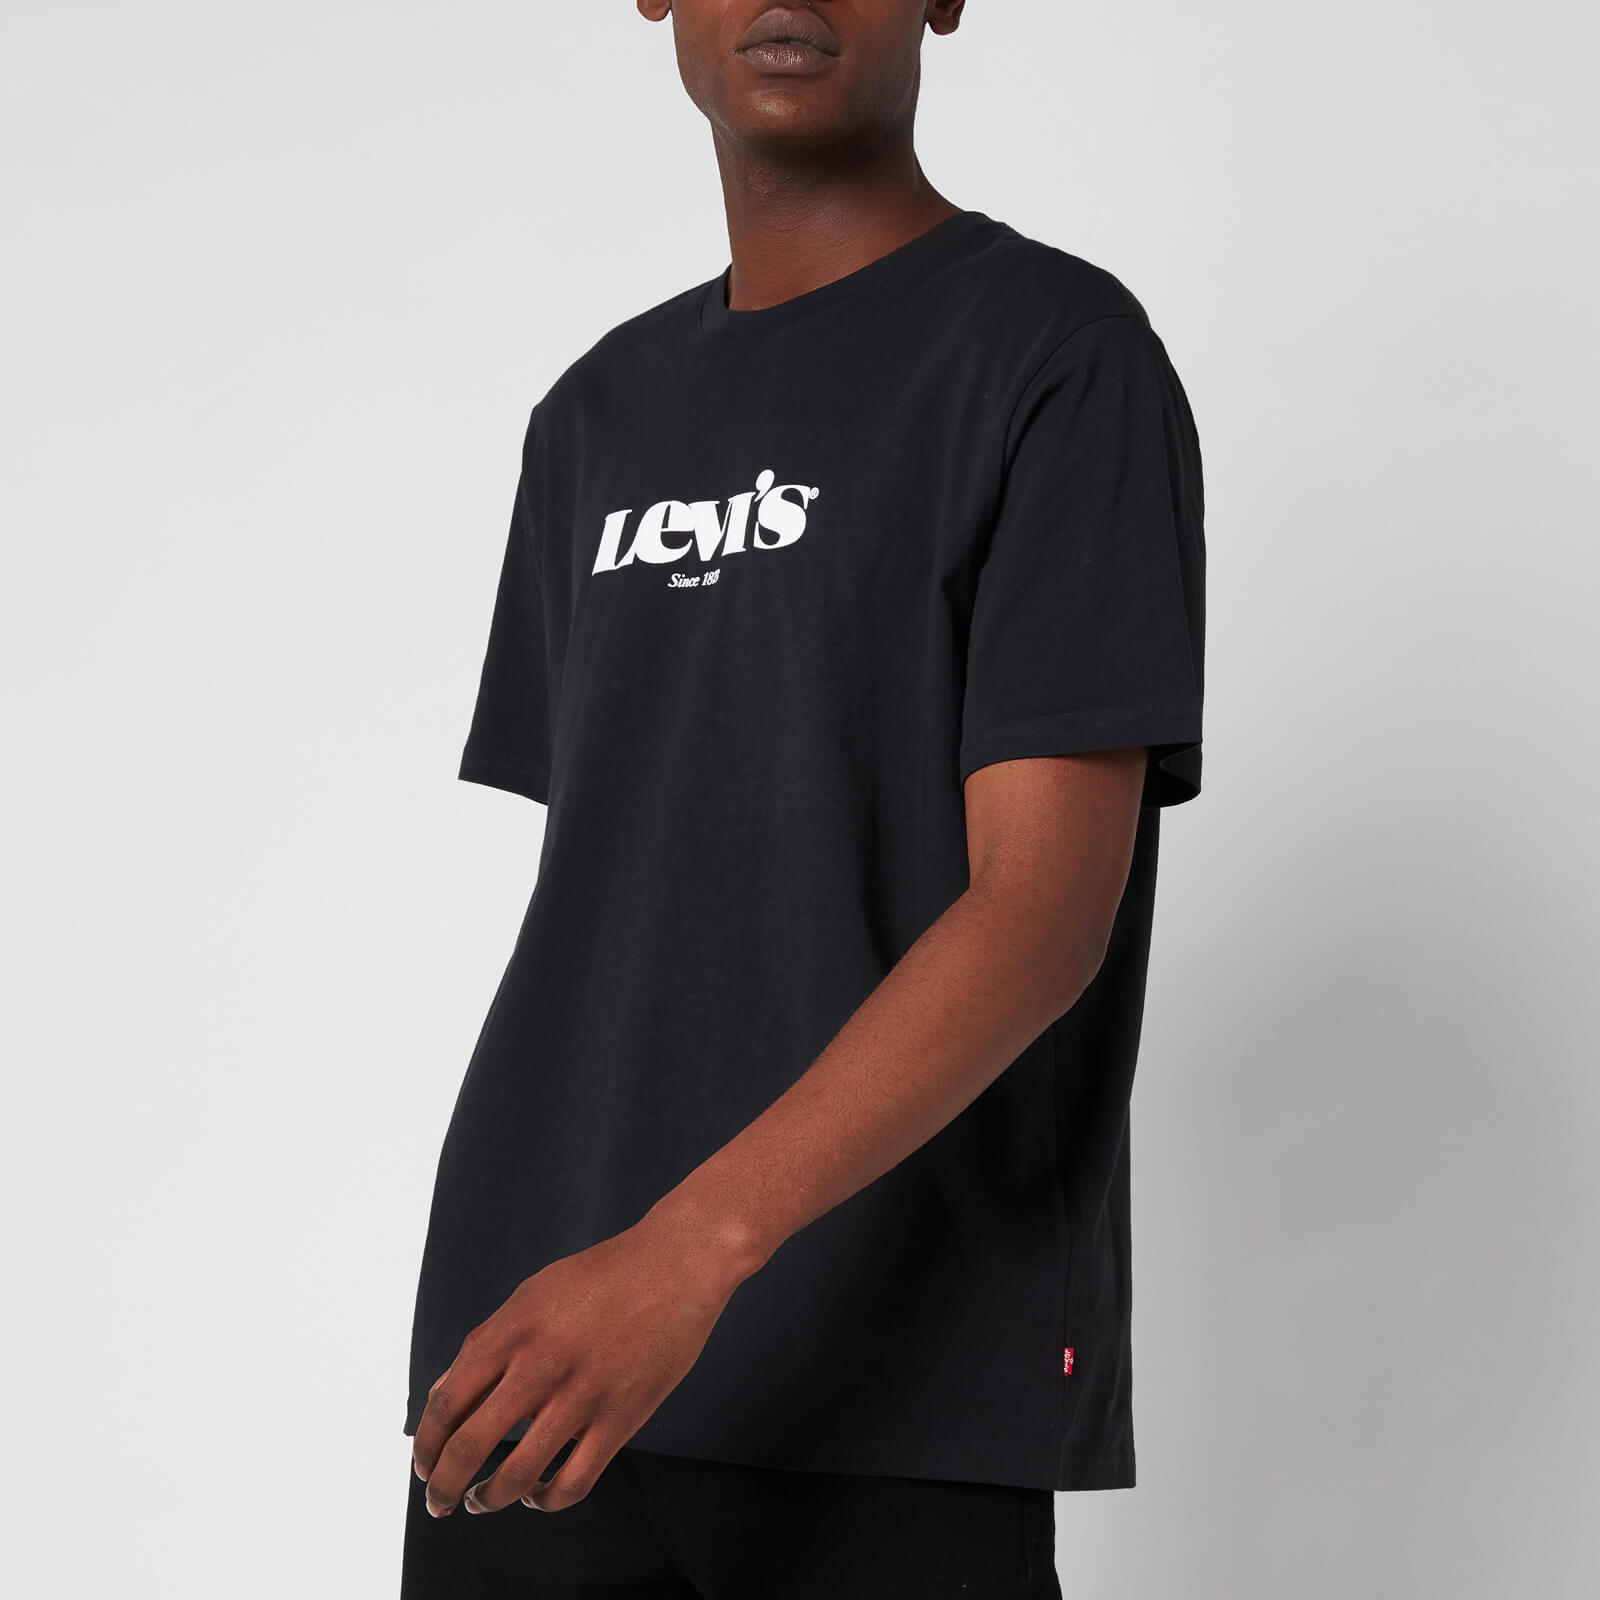 Levi's Men's Relaxed Fit T-Shirt - Caviar Black - M